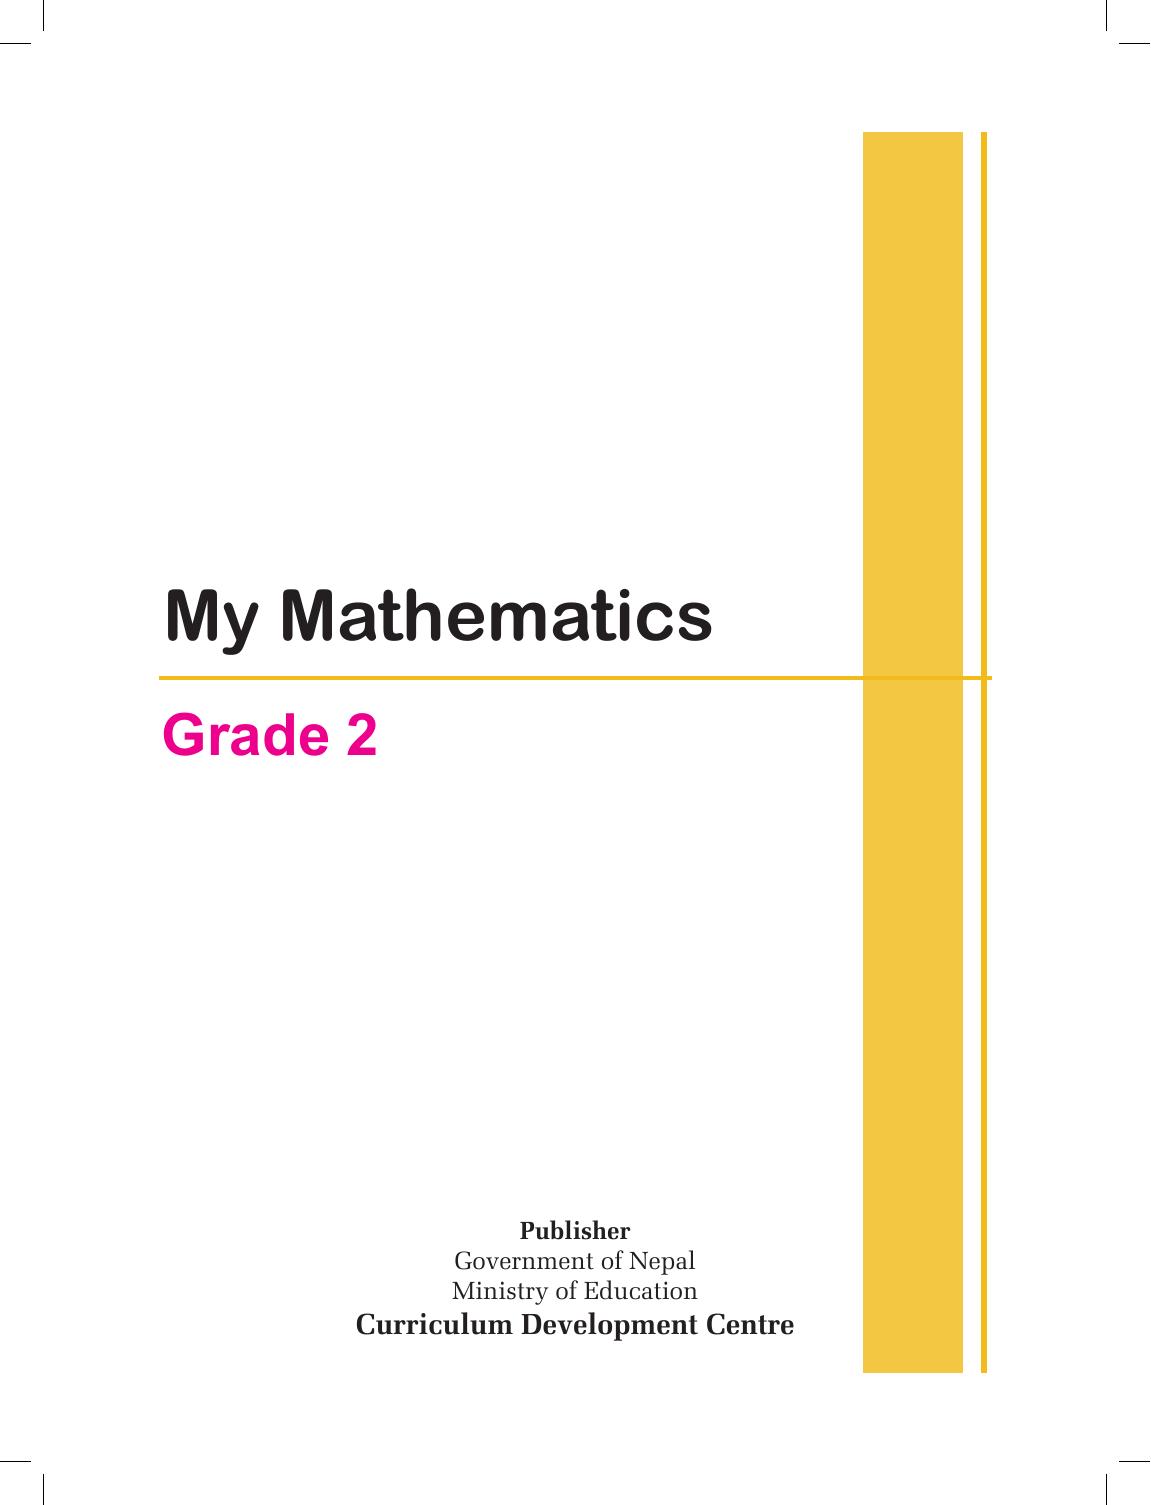 CDC 2074 - My Mathematics Grade 2